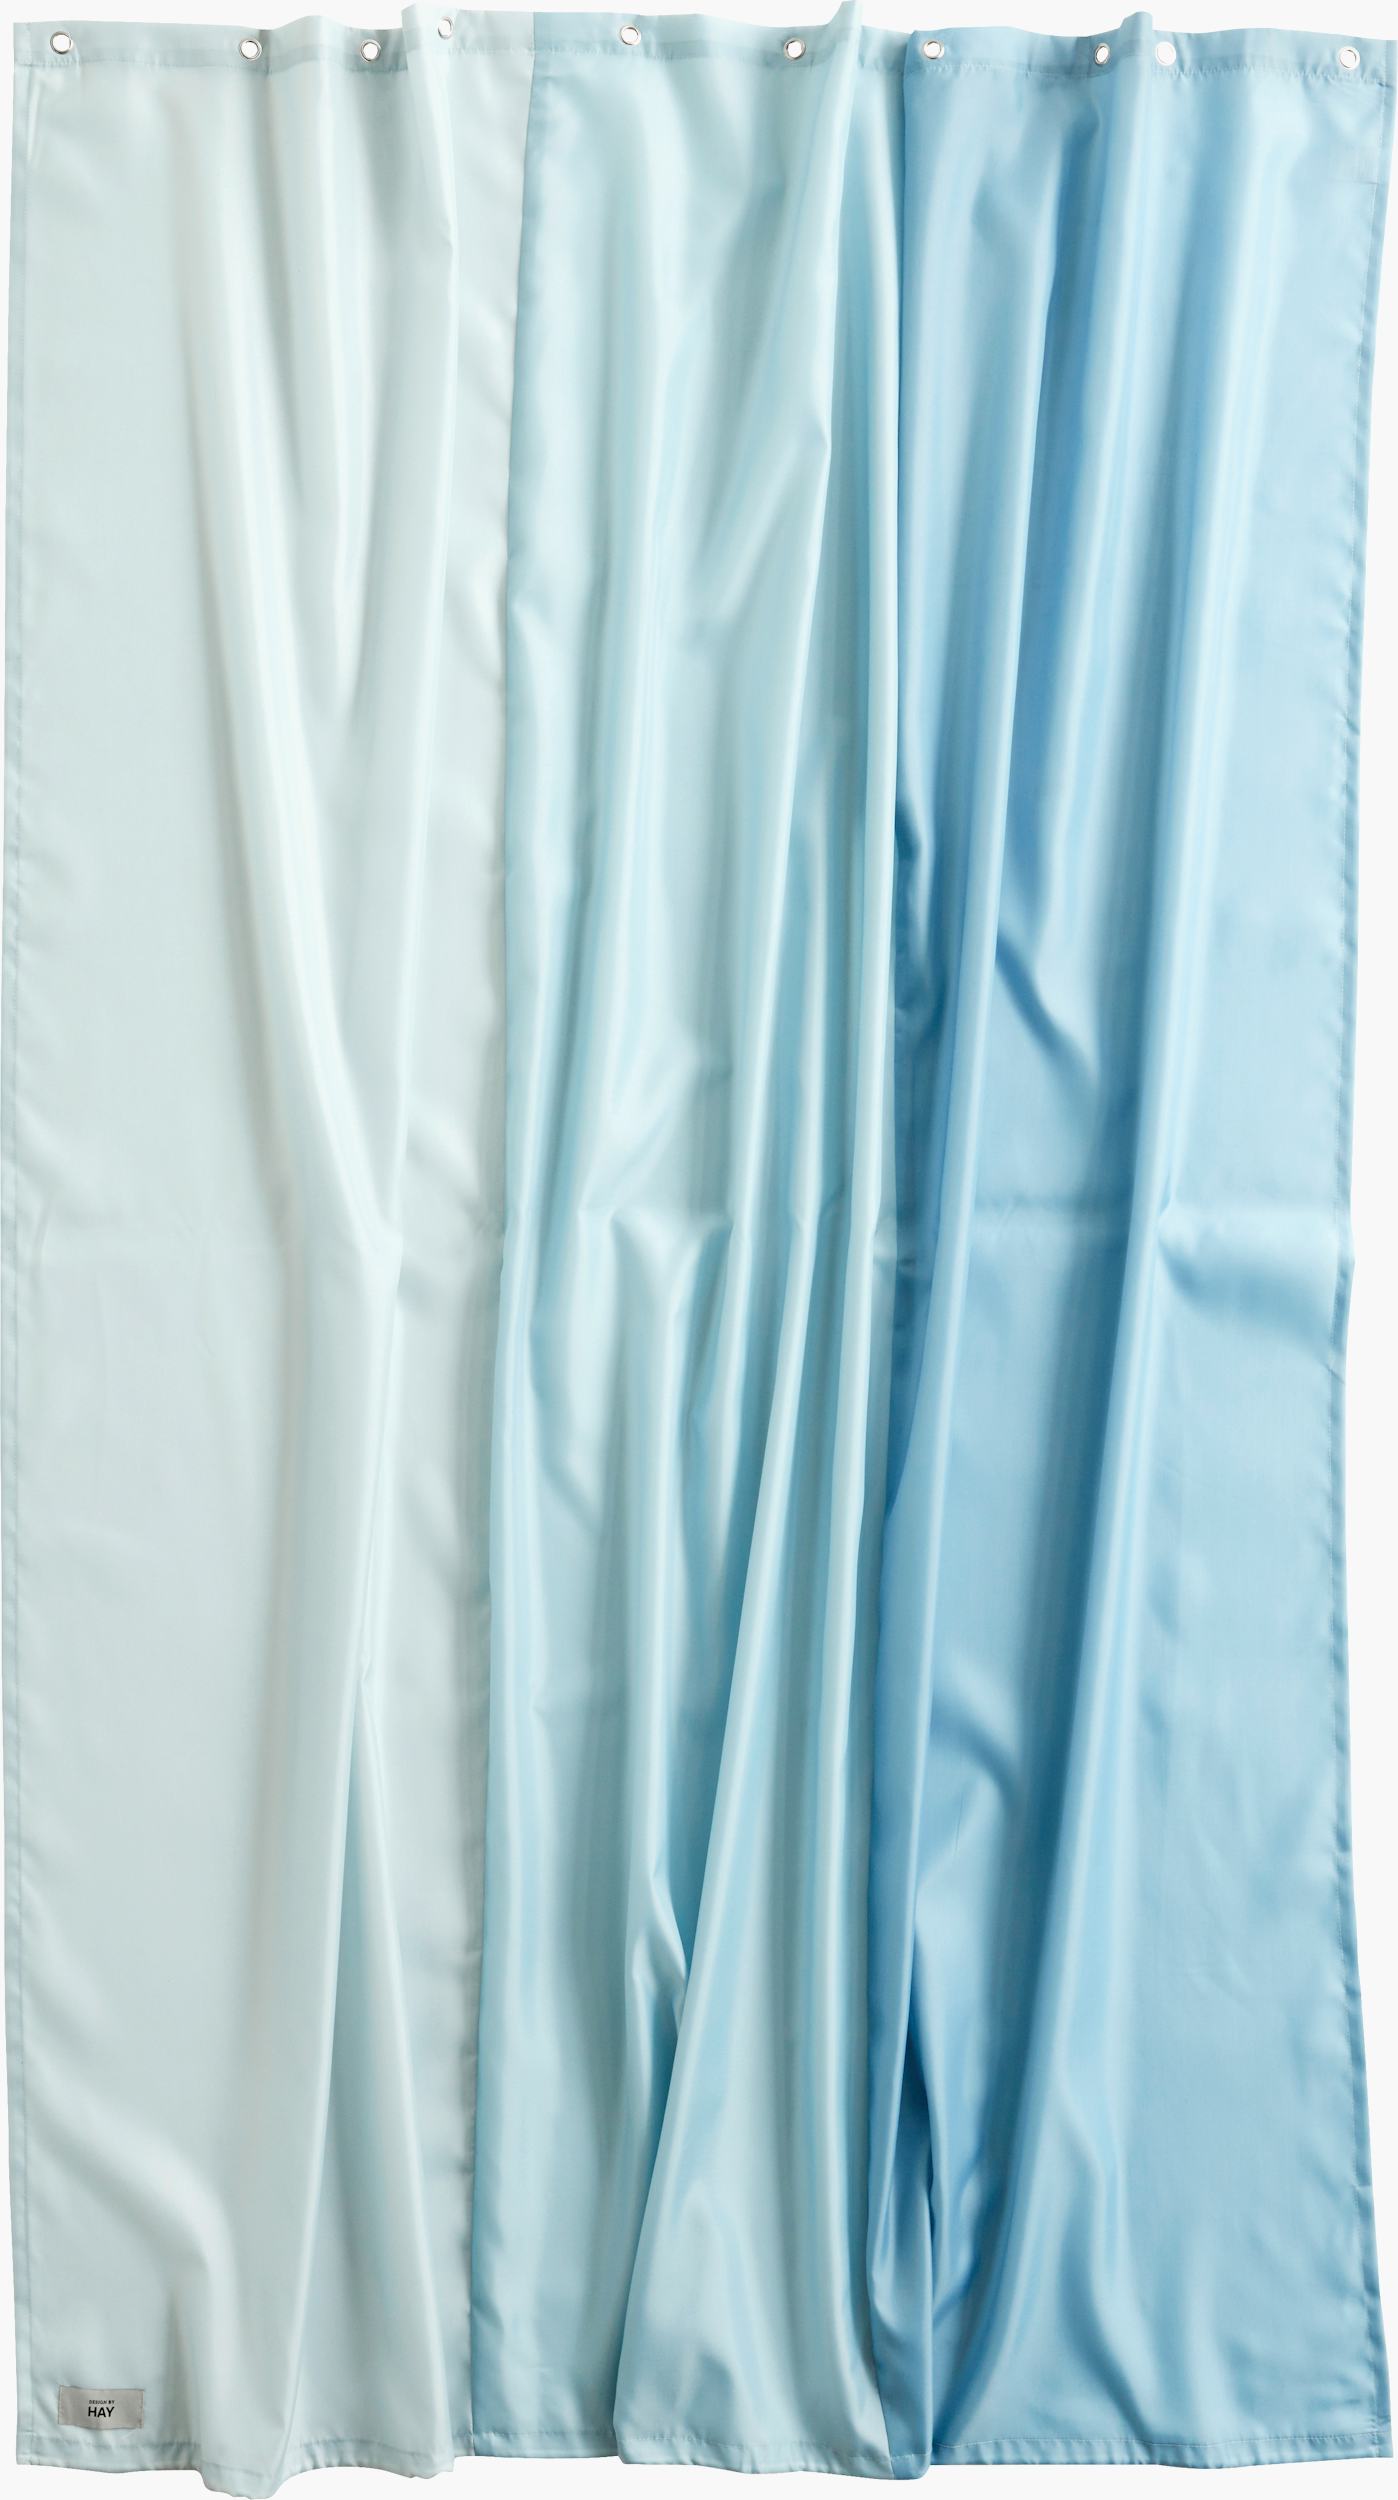 Hay - Pivot Shower curtain